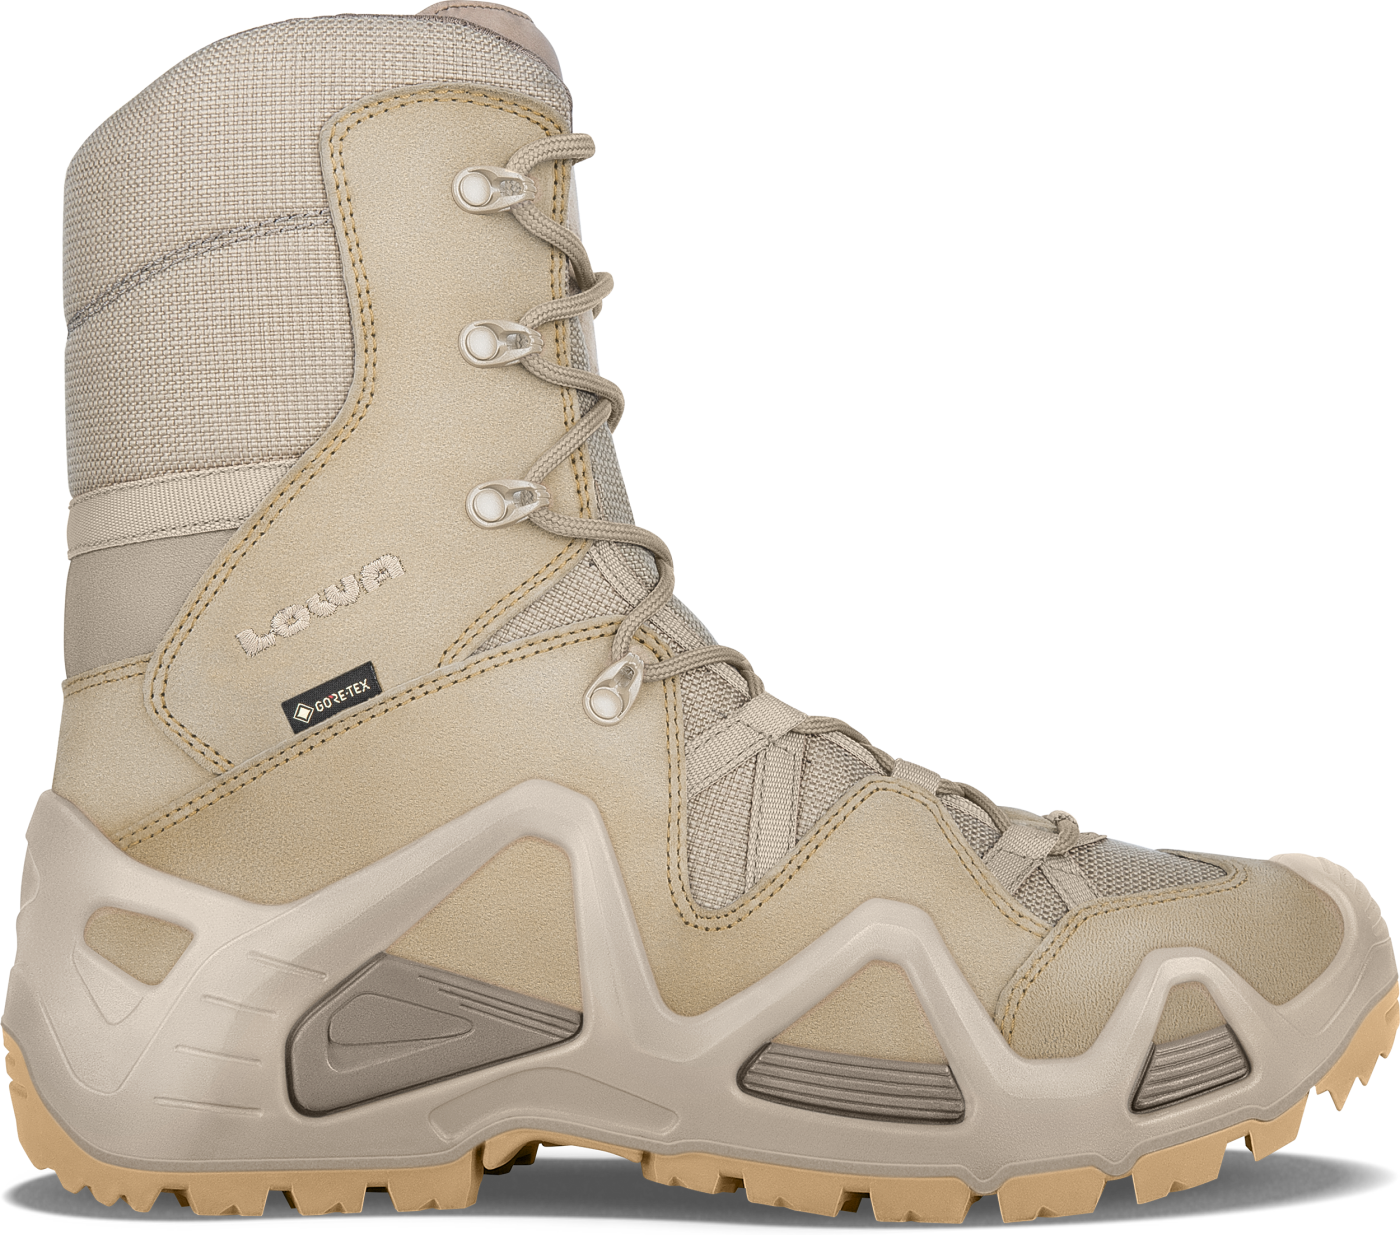 ZEPHYR GTX HI TF: TASK FORCE: CLOSE-QUARTERS COMBAT Shoes for Men 